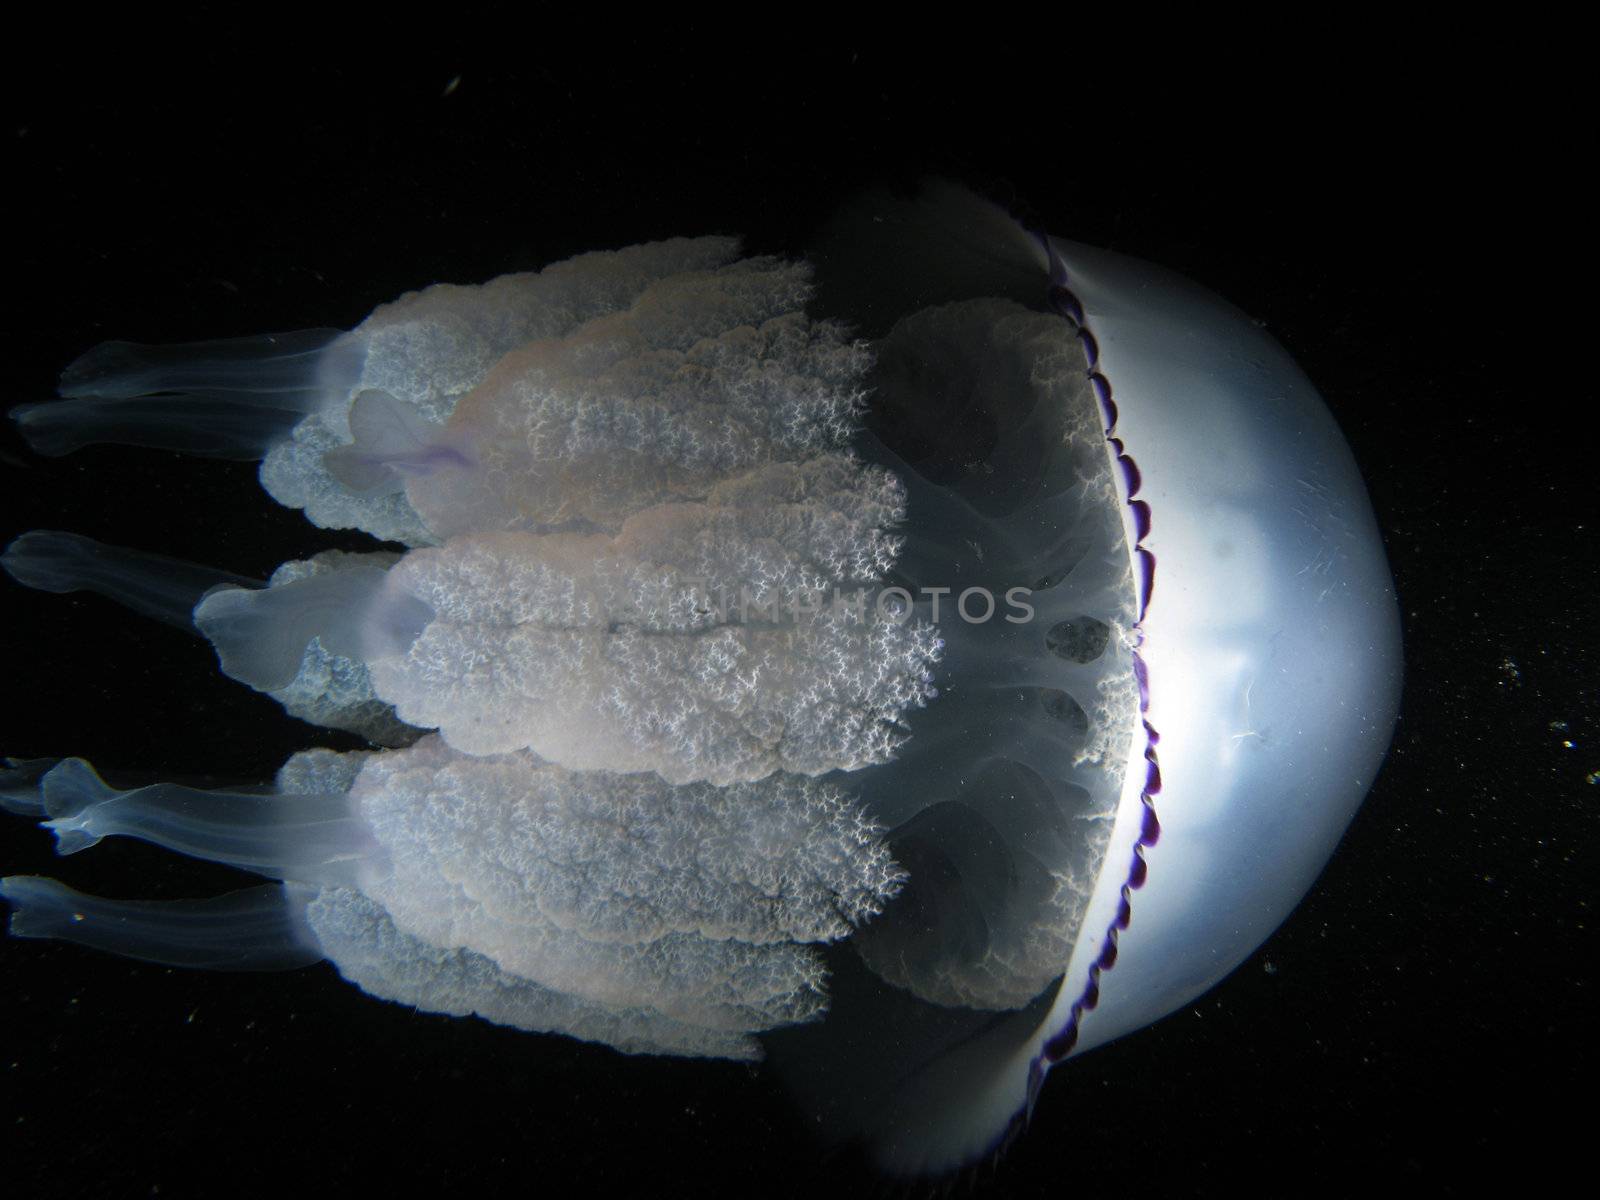 "Rhizostoma Pulmo" Jellyfish. Shotted in the wild, nighttime.